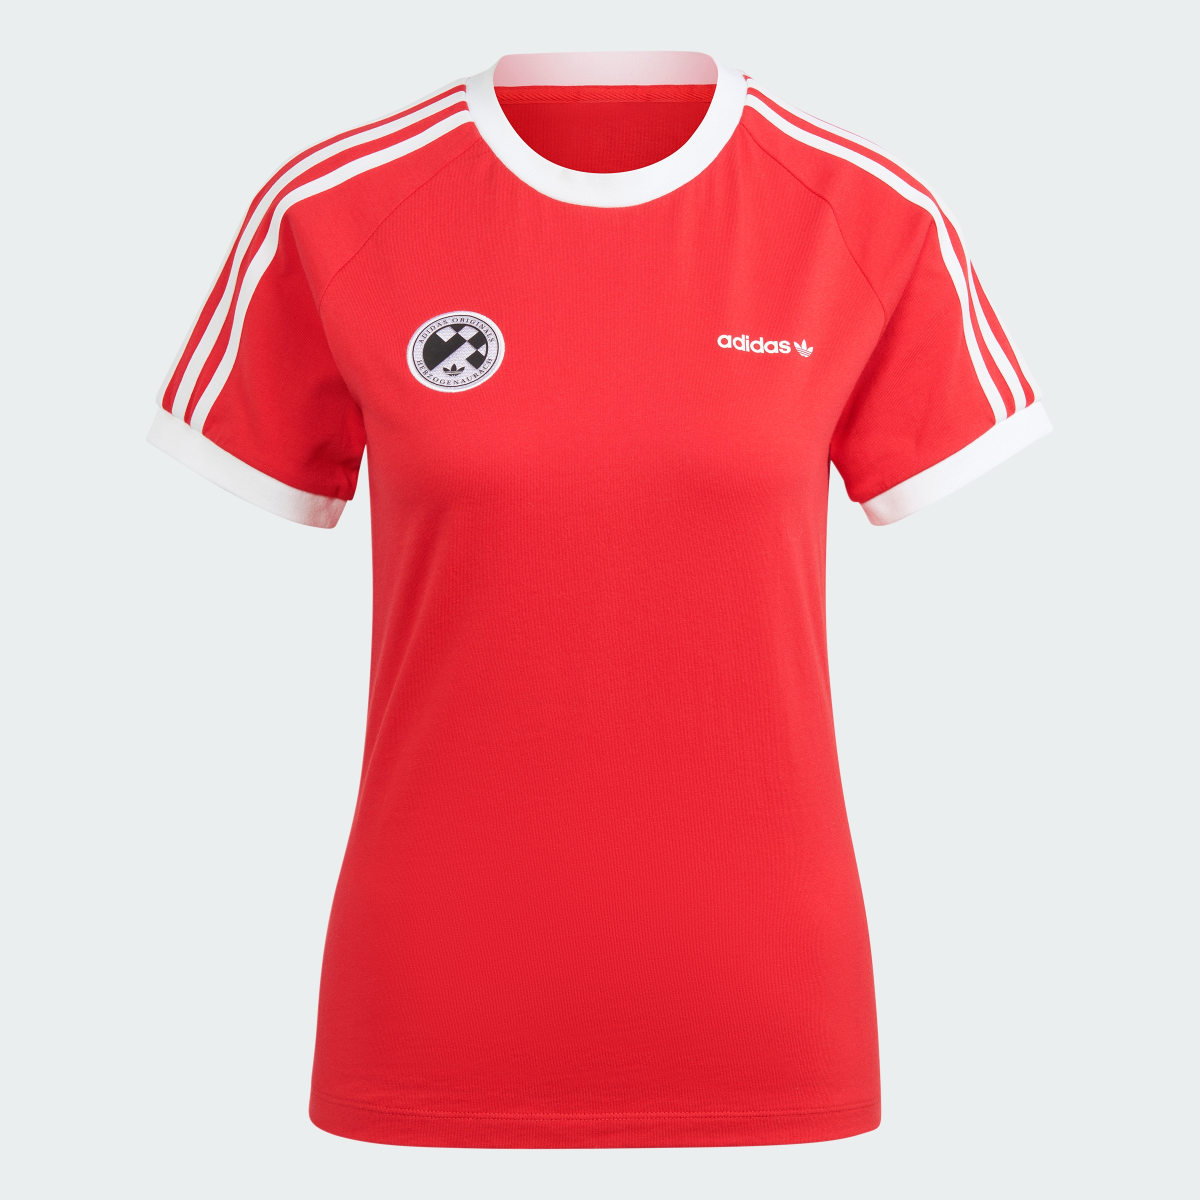 Adidas Football T-Shirt. 5